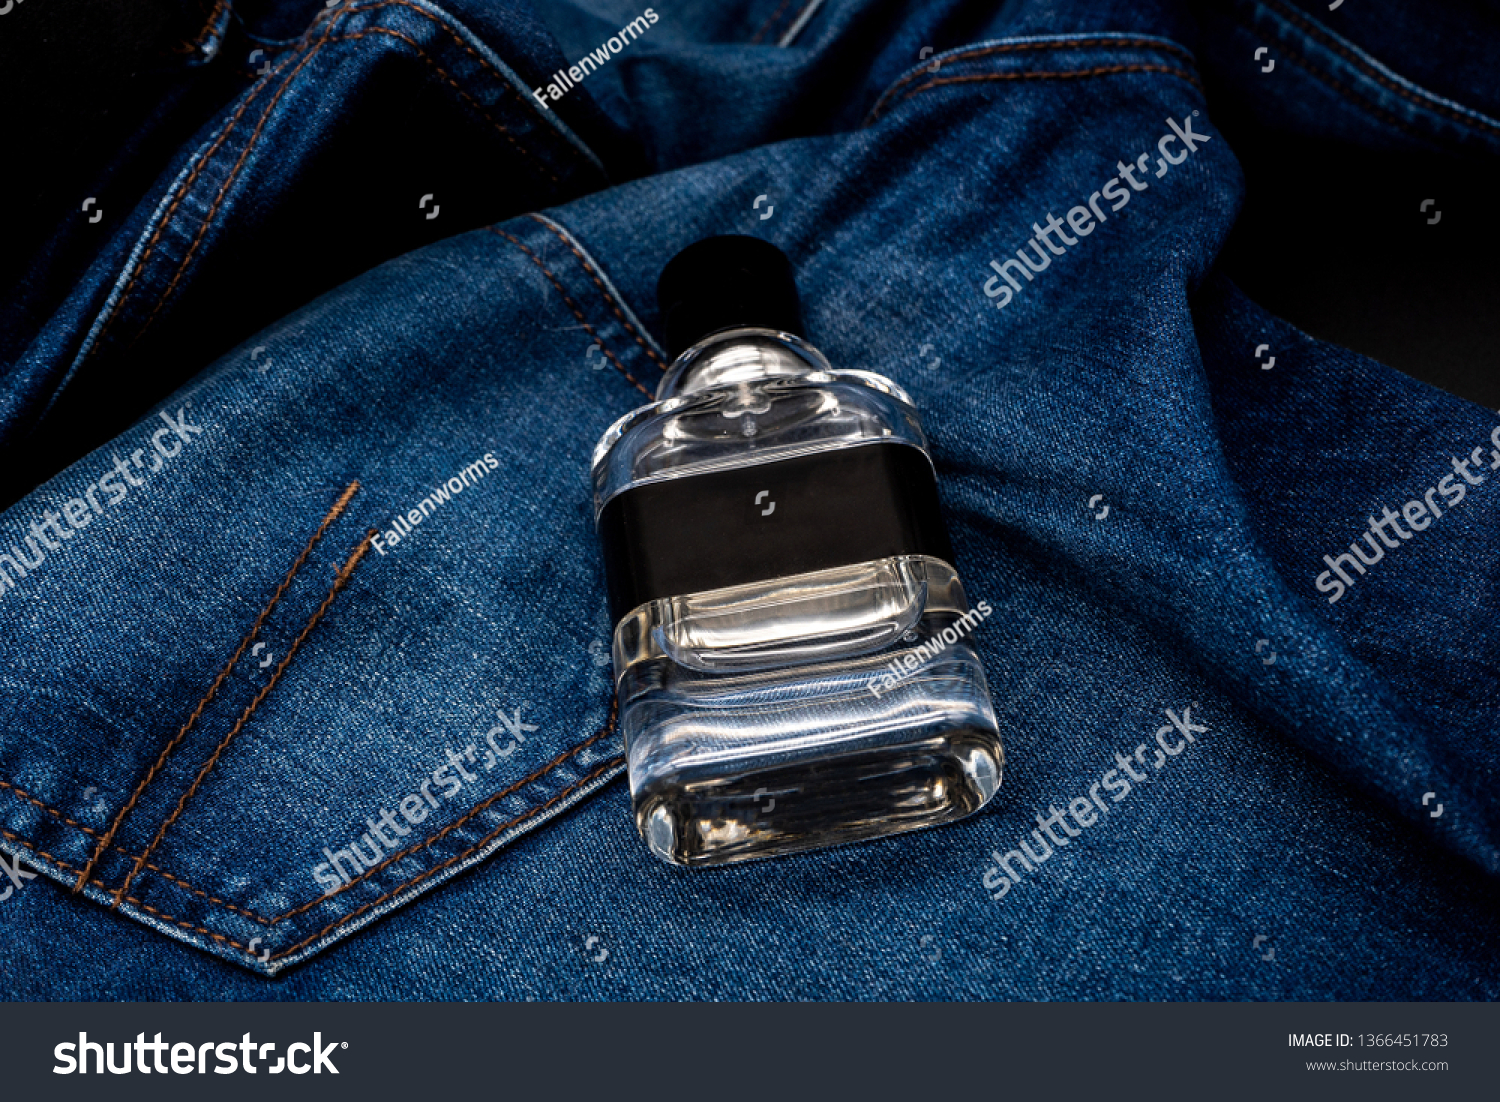 blue jeans mens perfume